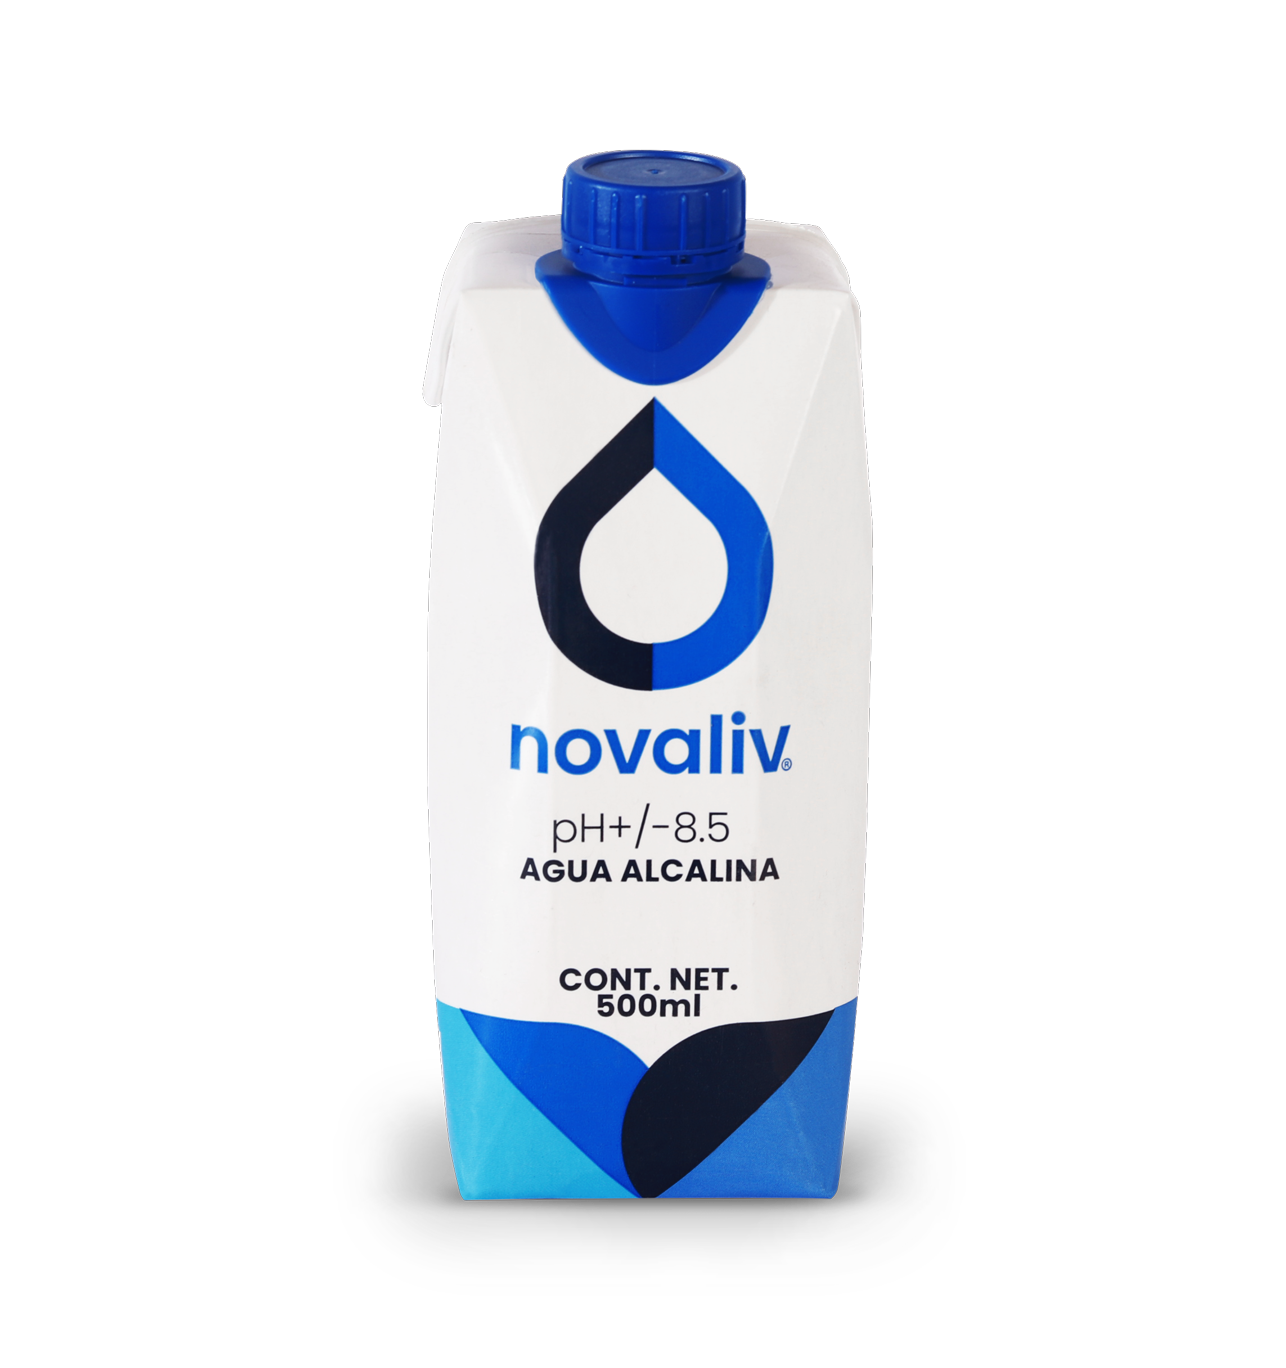 Novaliv Agua Alcalina TetraPak 12 x 500 ml